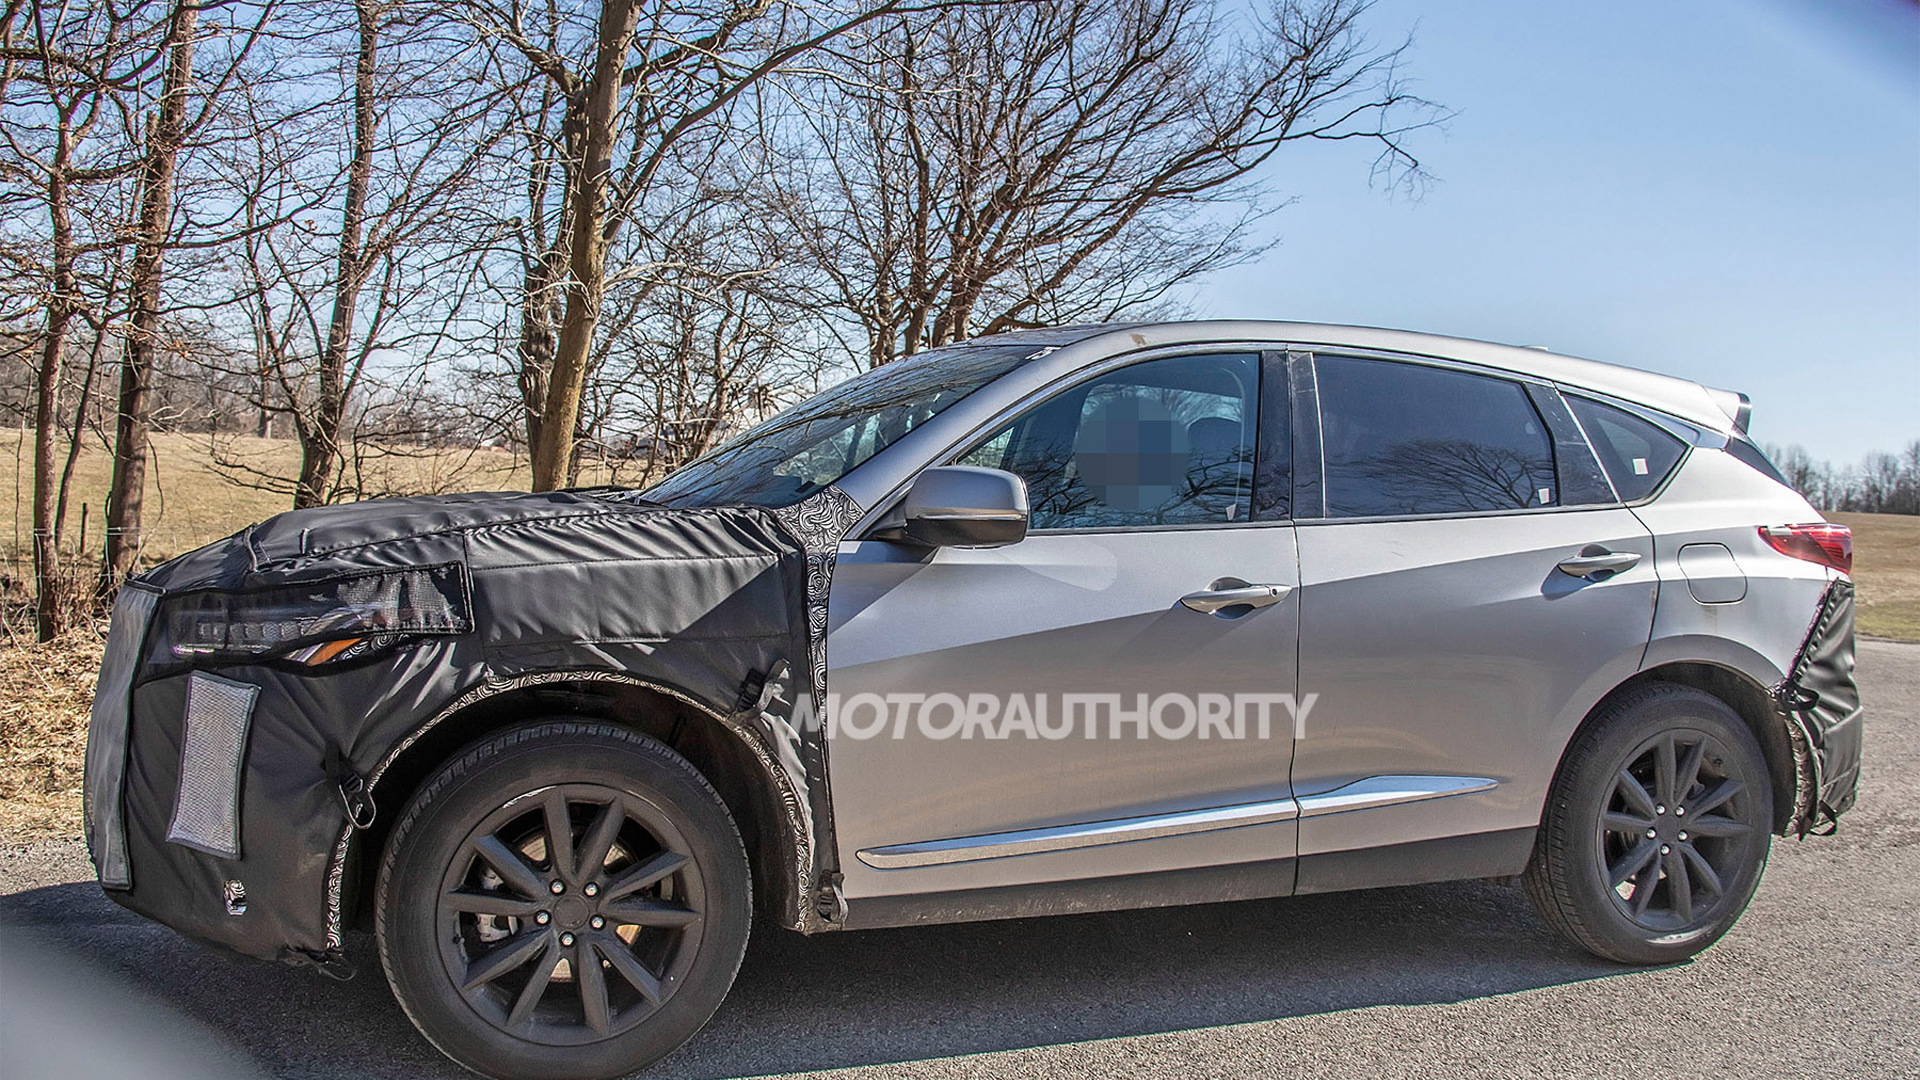 2022 Acura RDX facelift spy shots - Photo credit: S. Baldauf/SB-Medien